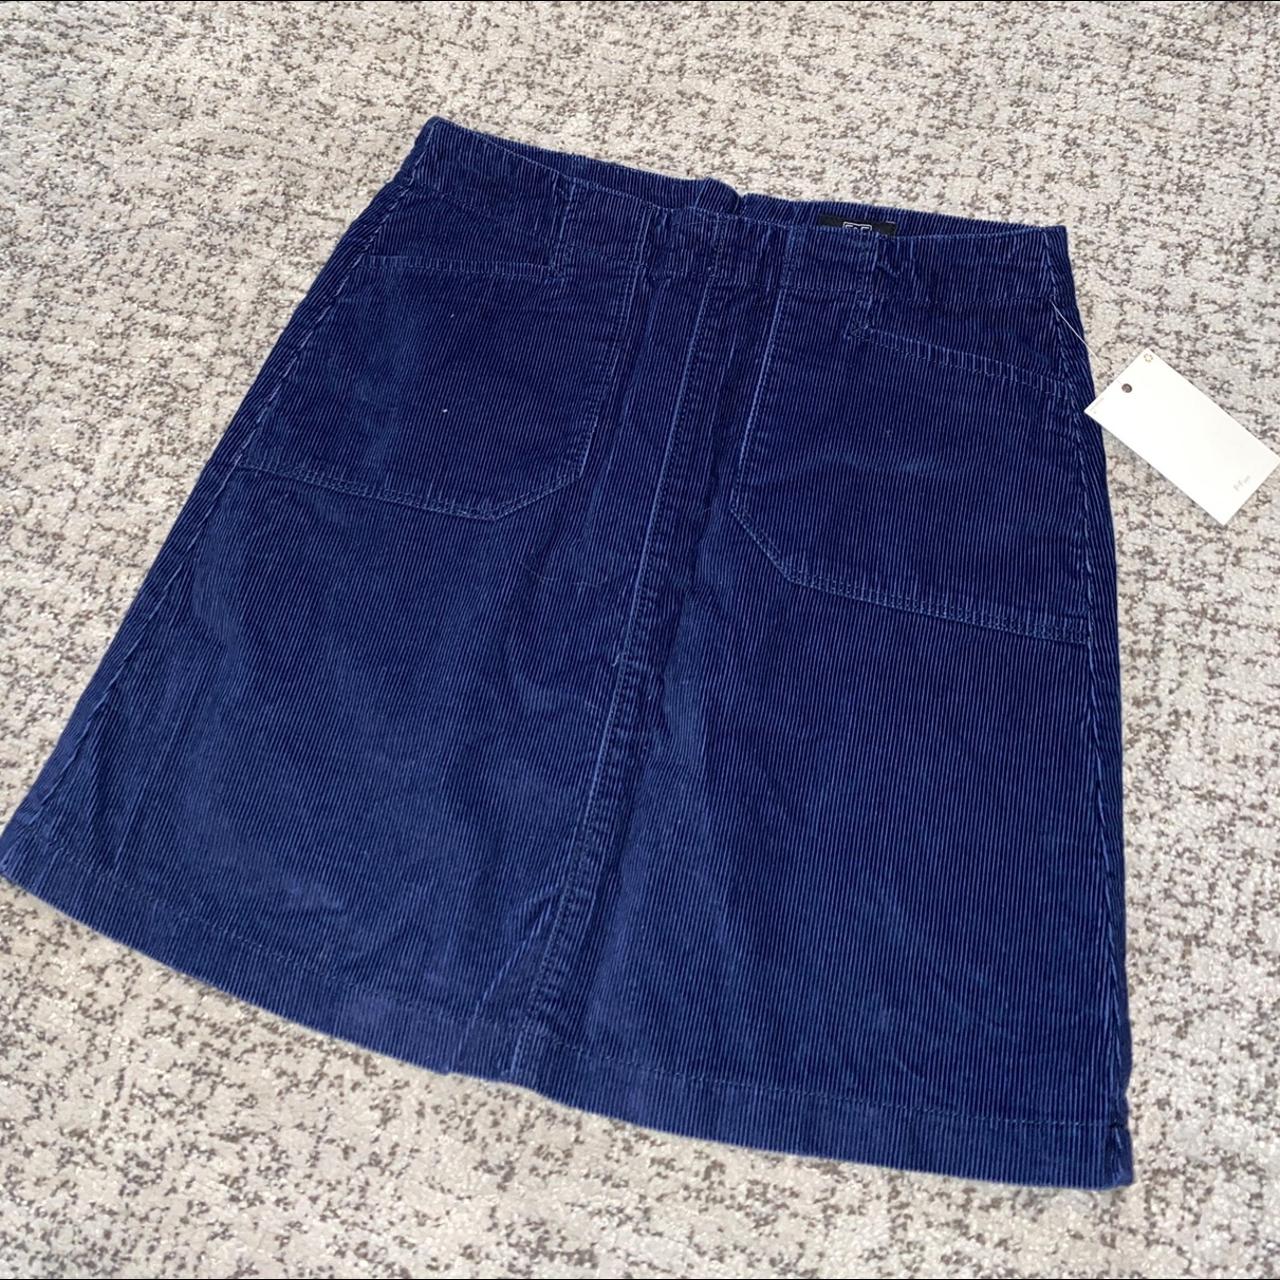 Product Image 2 - F&F. Short corduroy skirt. Pockets.